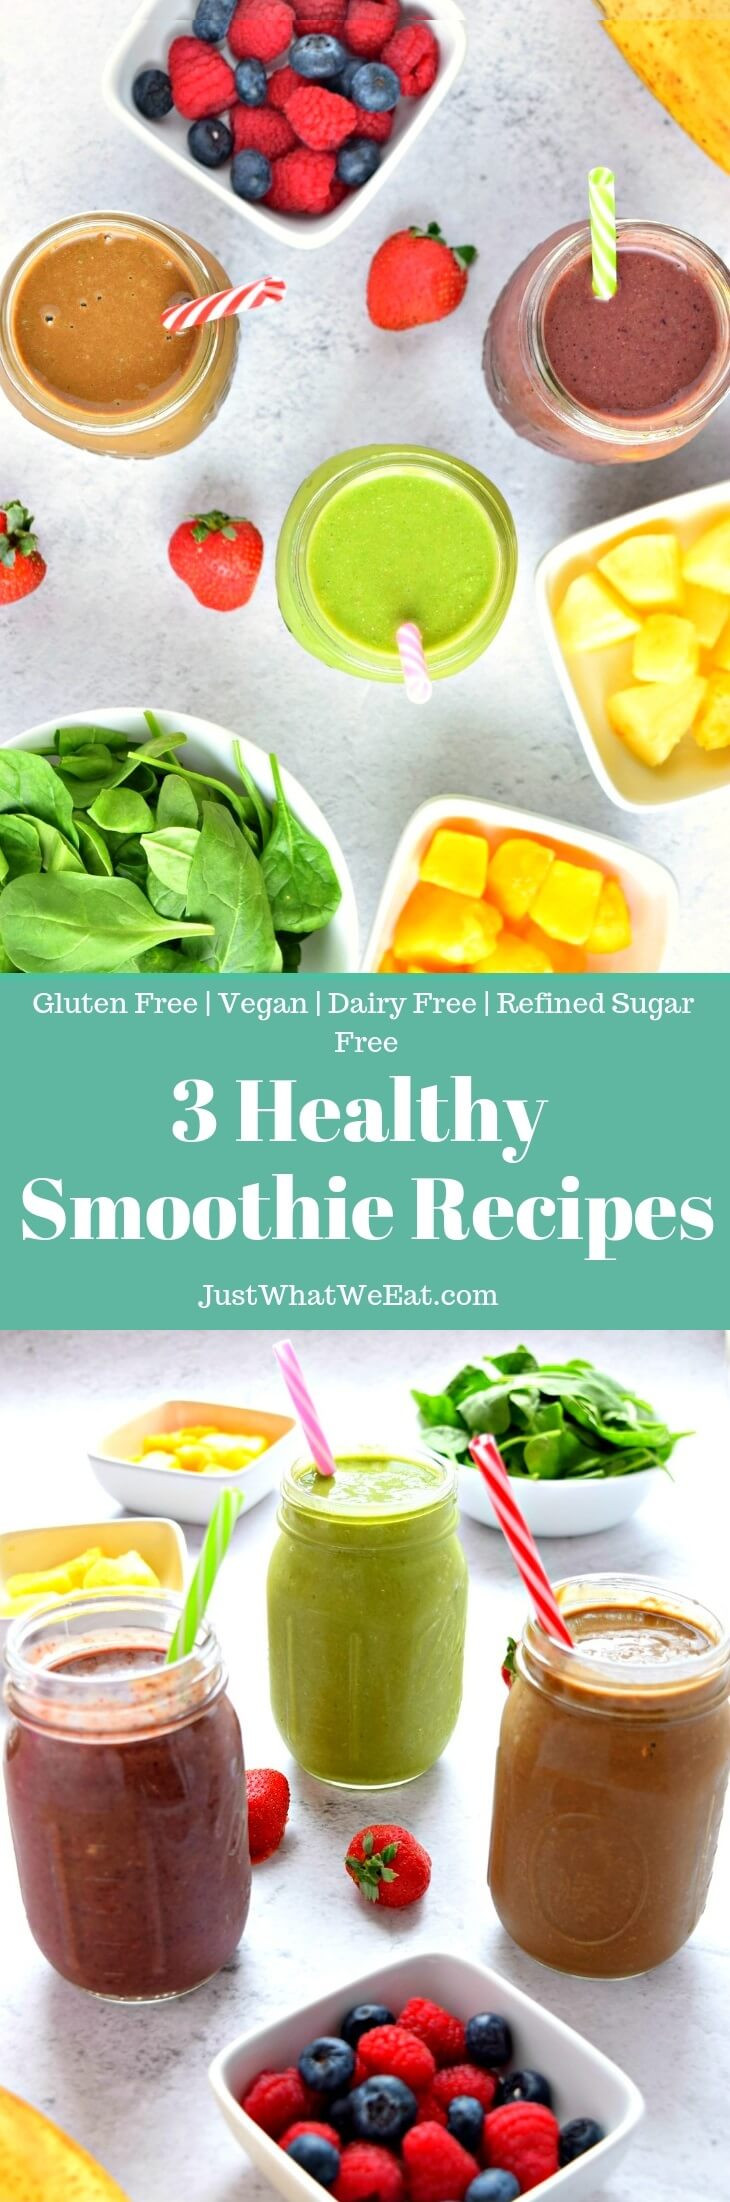 Sugar Free Smoothie Recipes
 3 Healthy Smoothie Recipes Gluten Free Vegan Refined